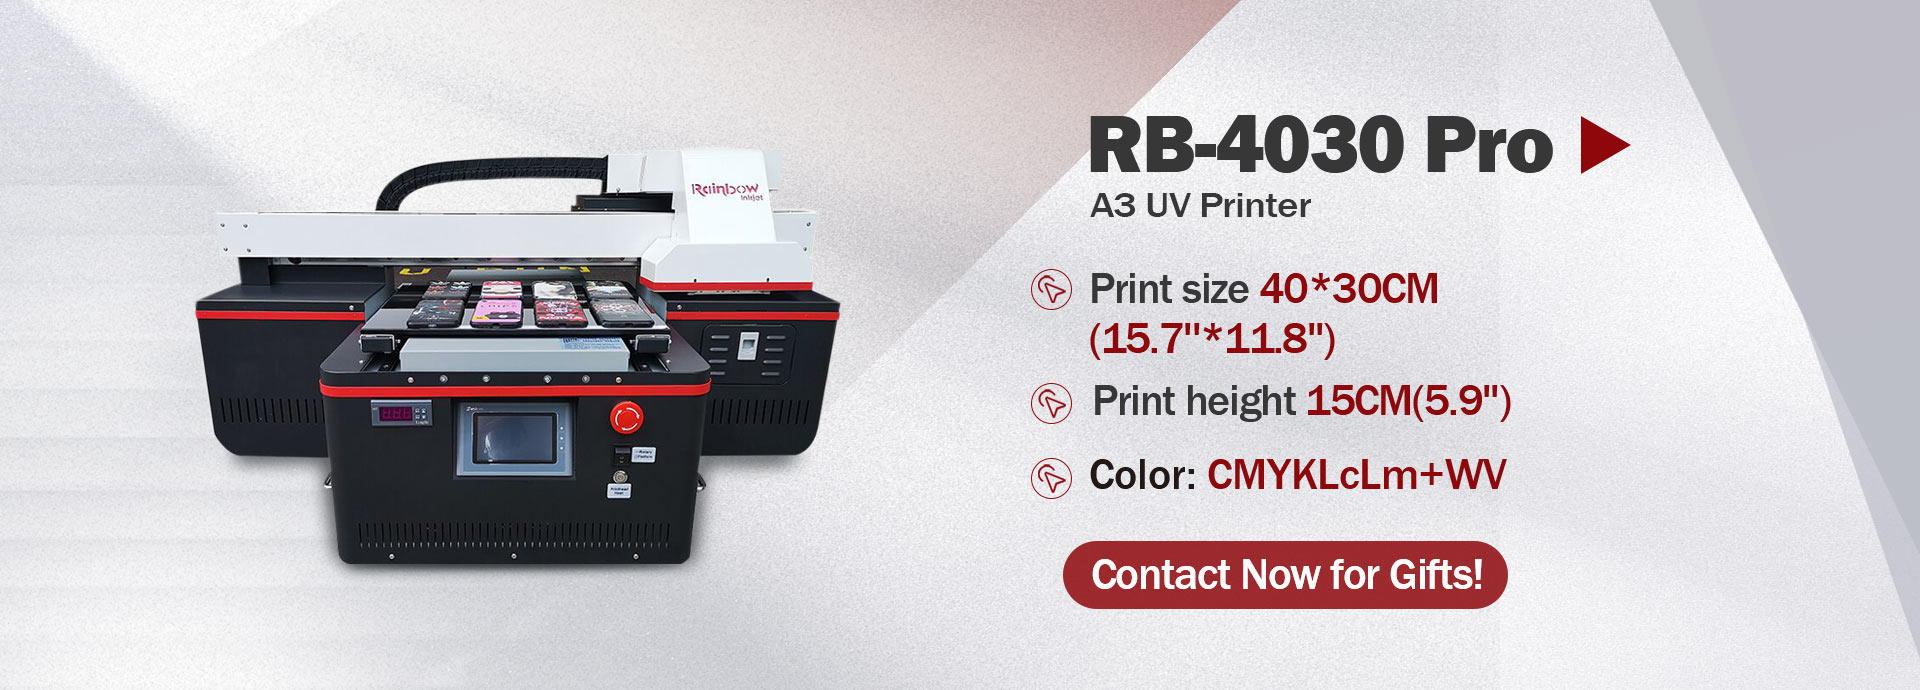 uv printer-4030